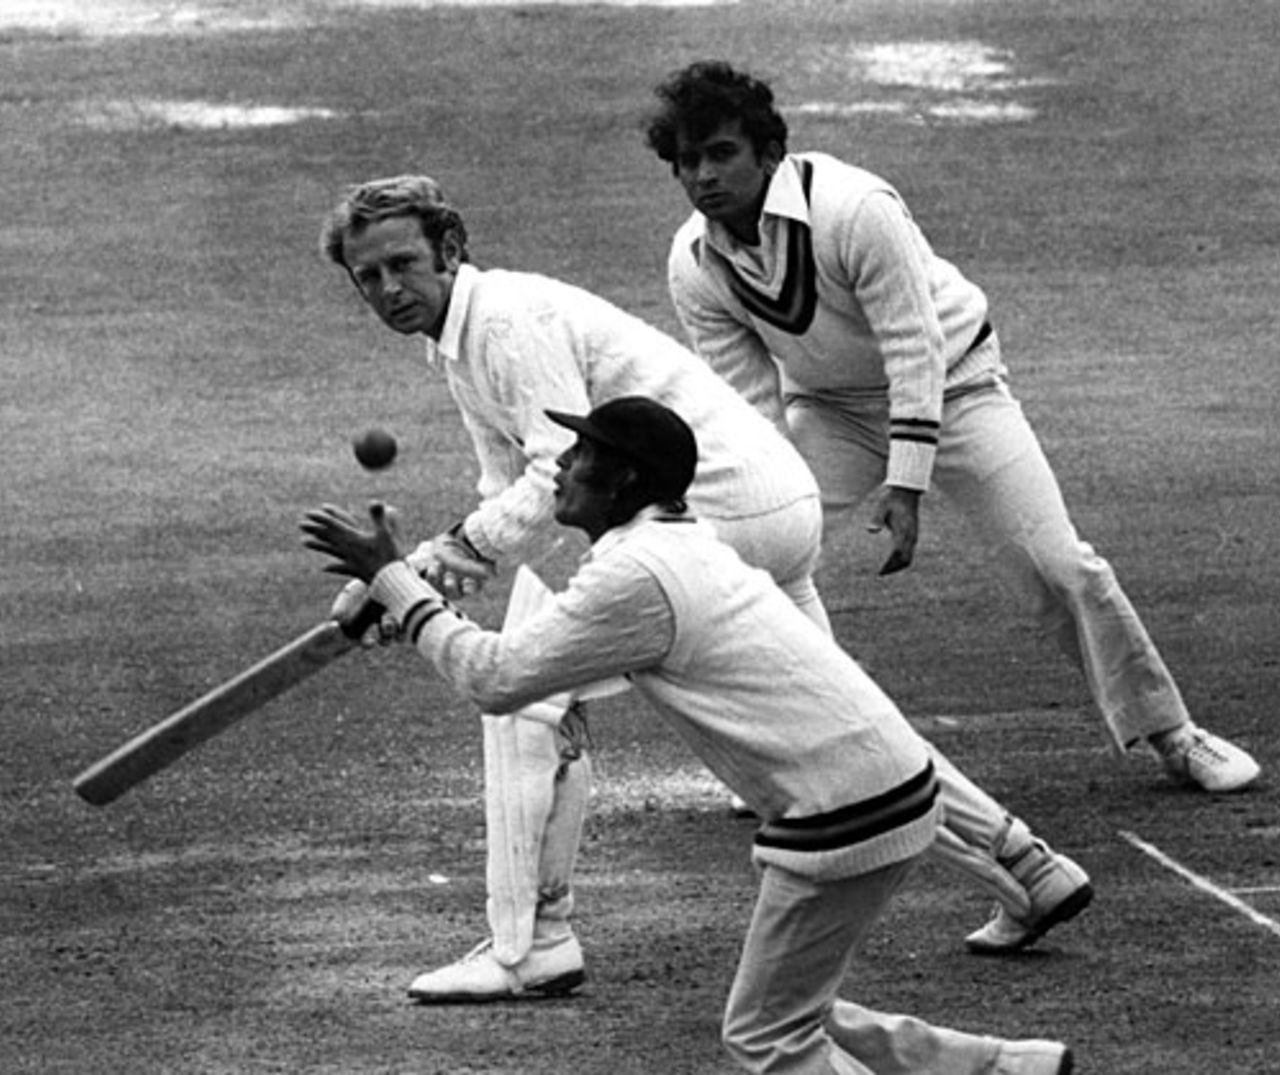 Eknath Solkar takes a catch off Derek Underwood as Sunil Gavaskar watches from silly point, England v India, 1st Test, Old Trafford, 2nd day, June 7, 1974